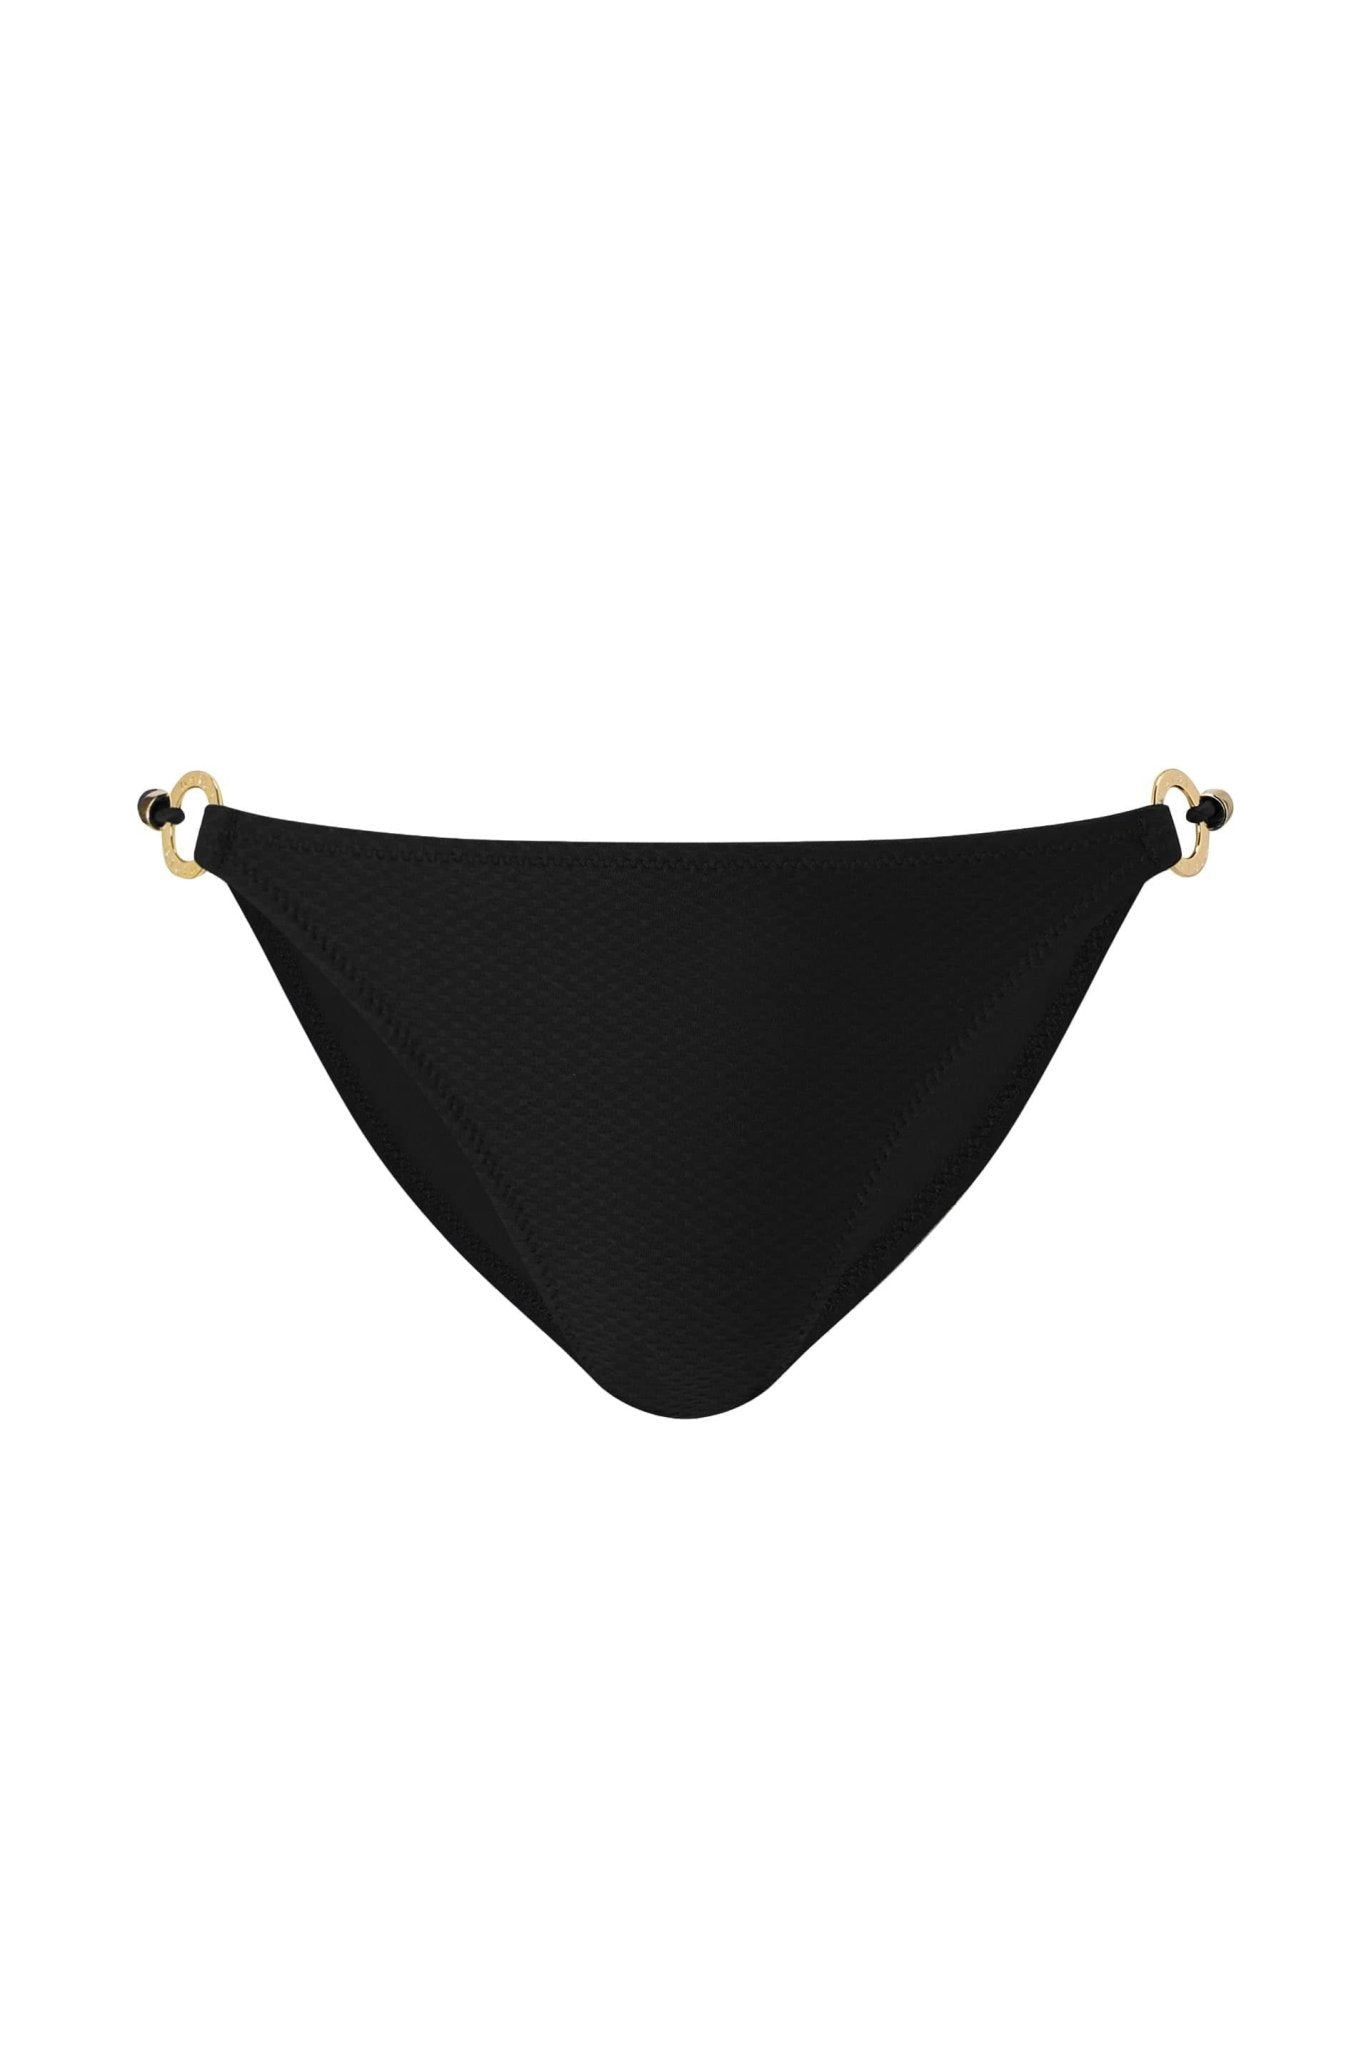 Core Ring Triangle Bikini Bottom in Black - Heidi Klein - UK Store